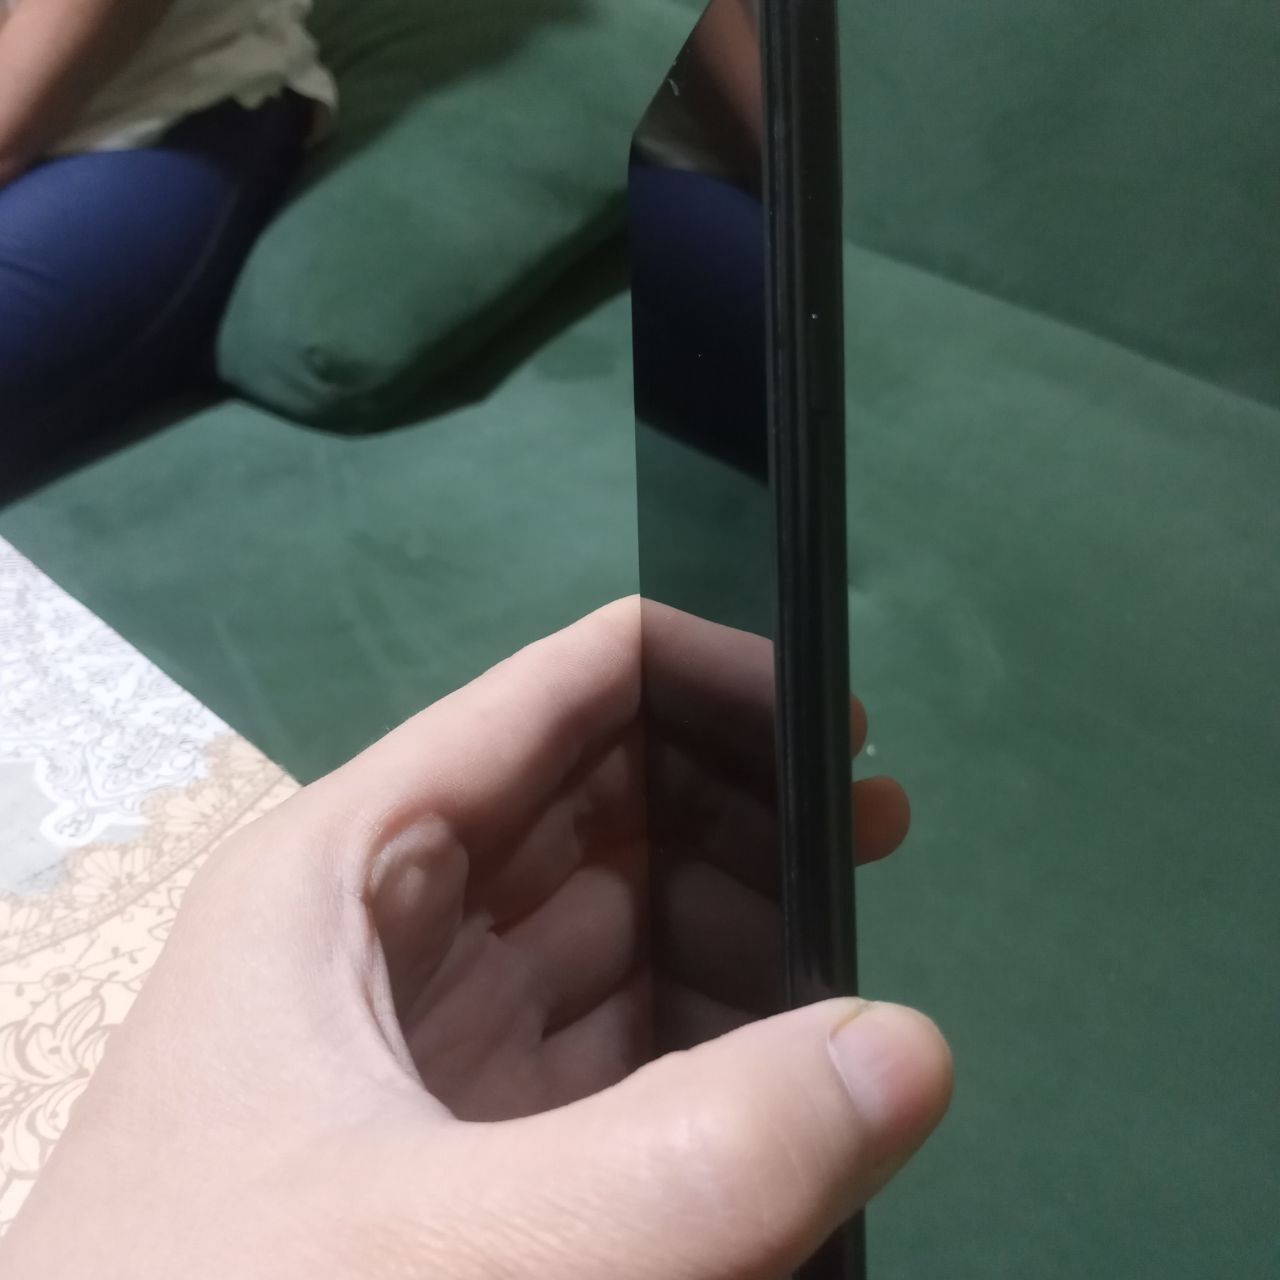 Samsung A20s telefon